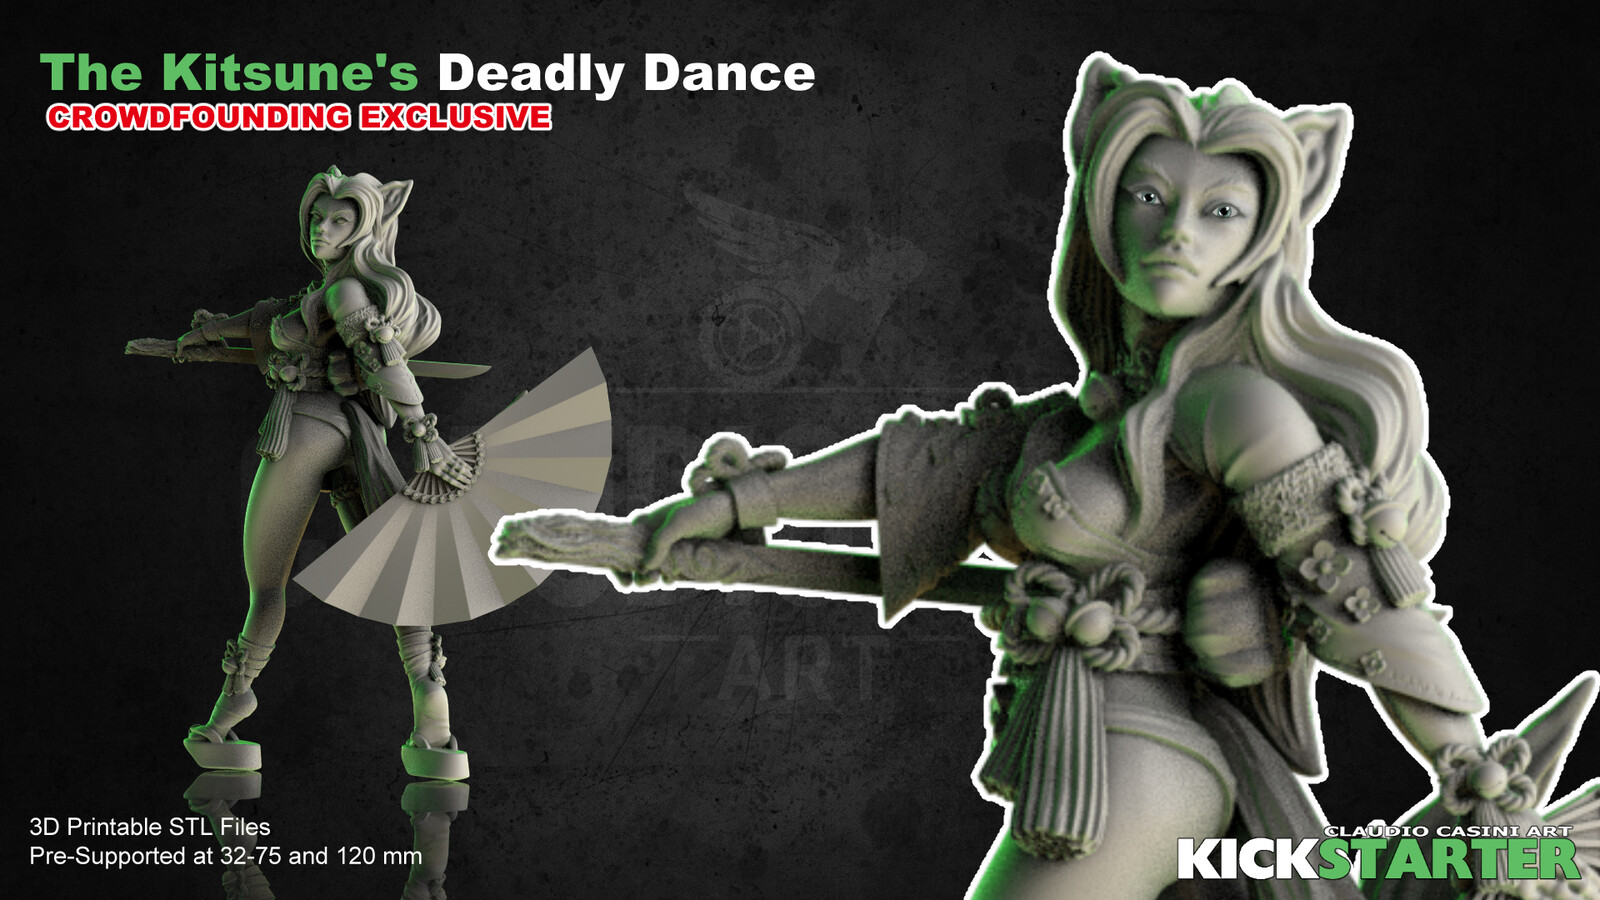 The Kitsune's Deadly Dance
http://kck.st/46q42af